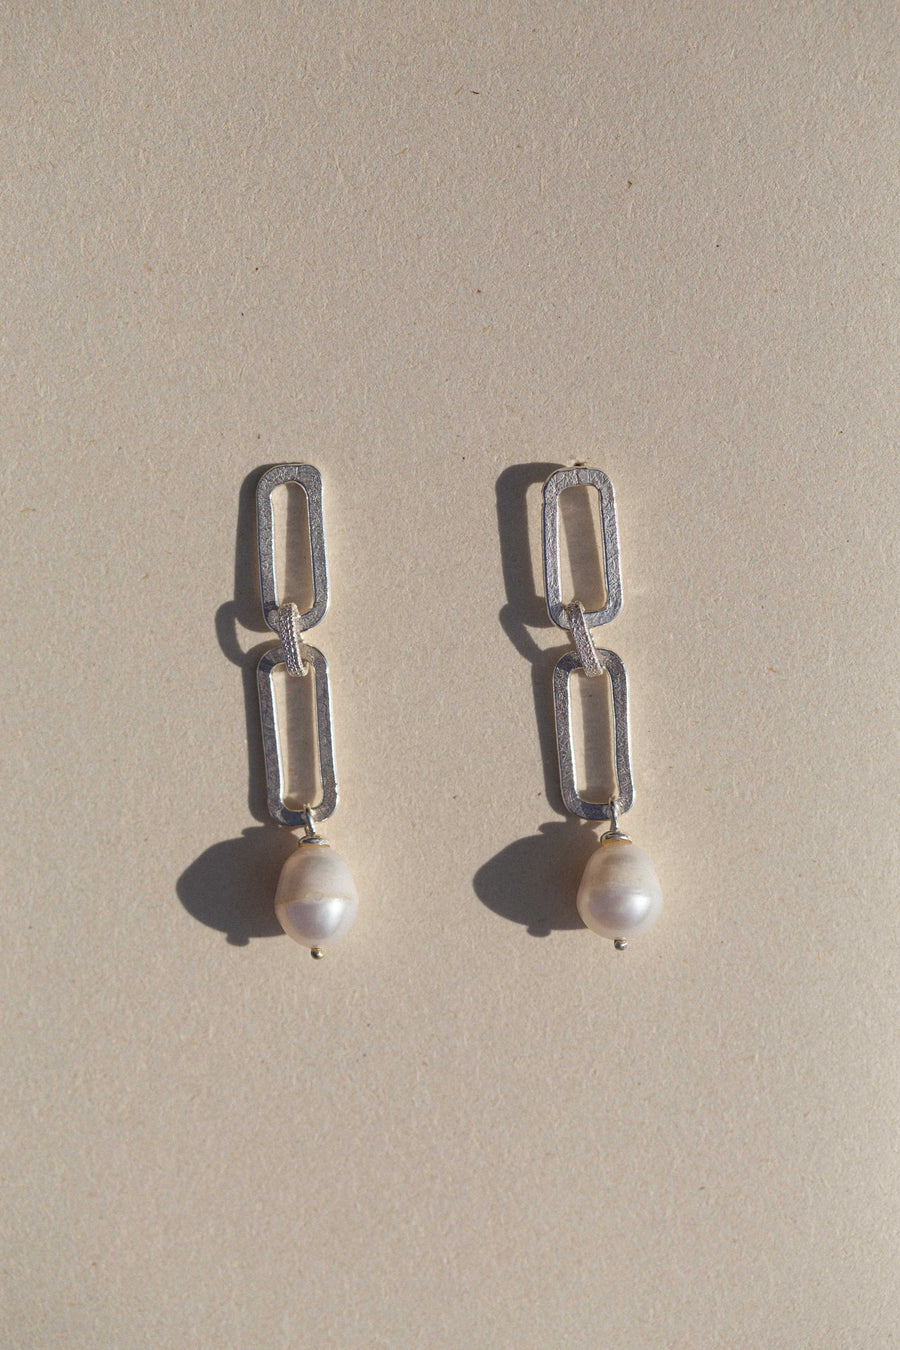 SAMSA Silver Chain Earrings with Pearl